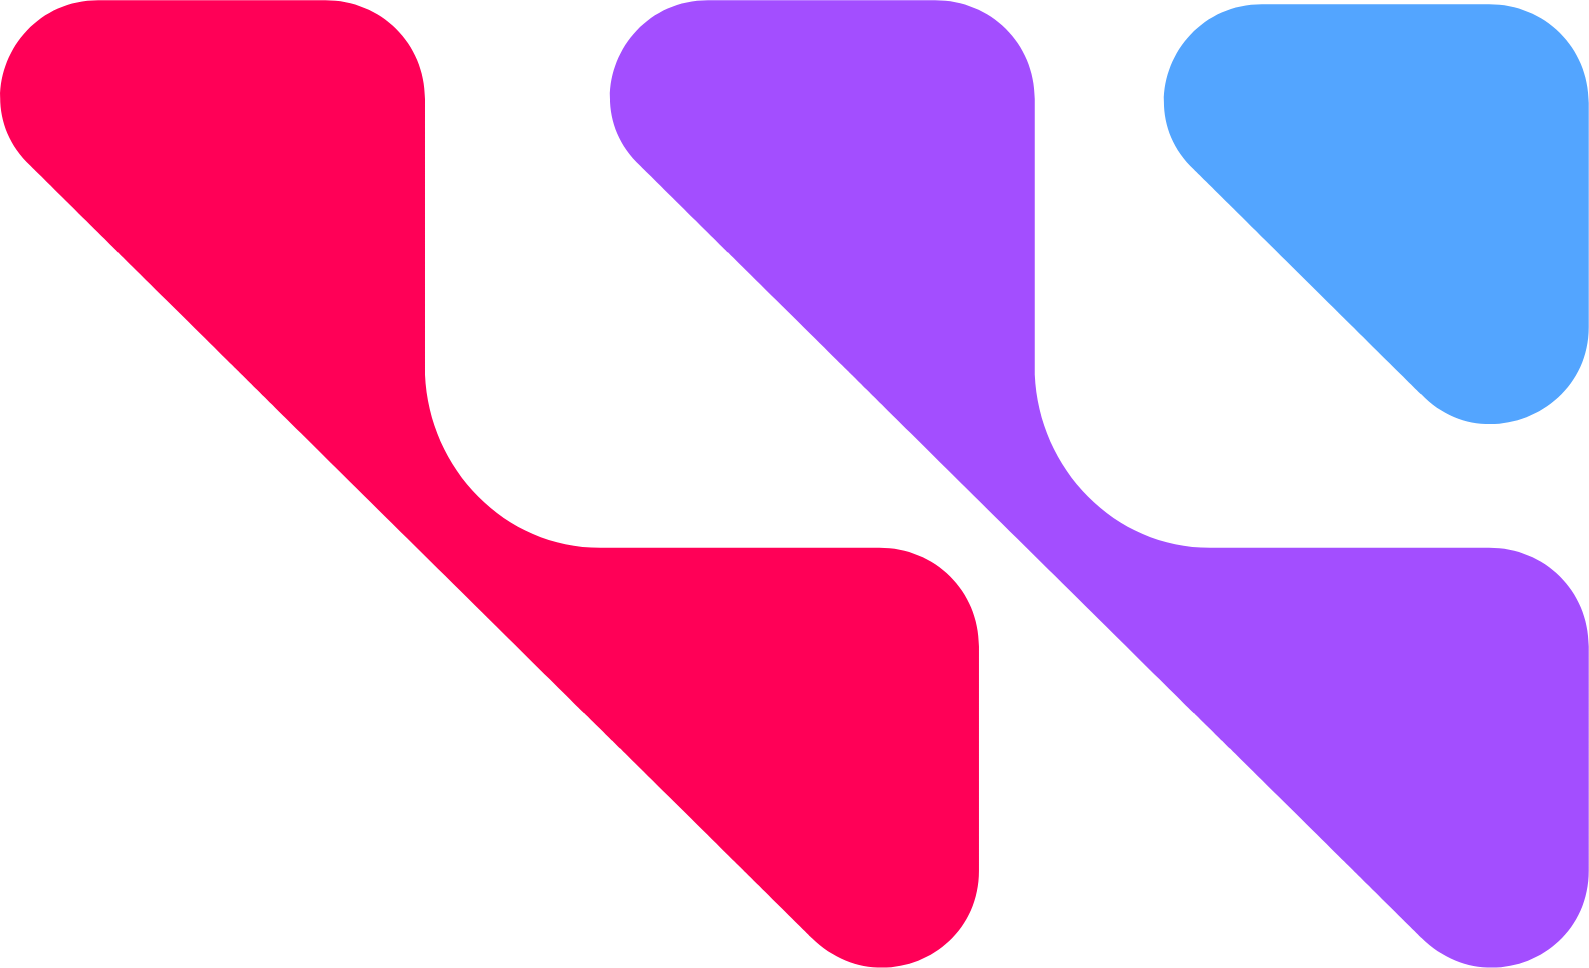 Western Digital logo in transparent PNG and vectorized SVG formats